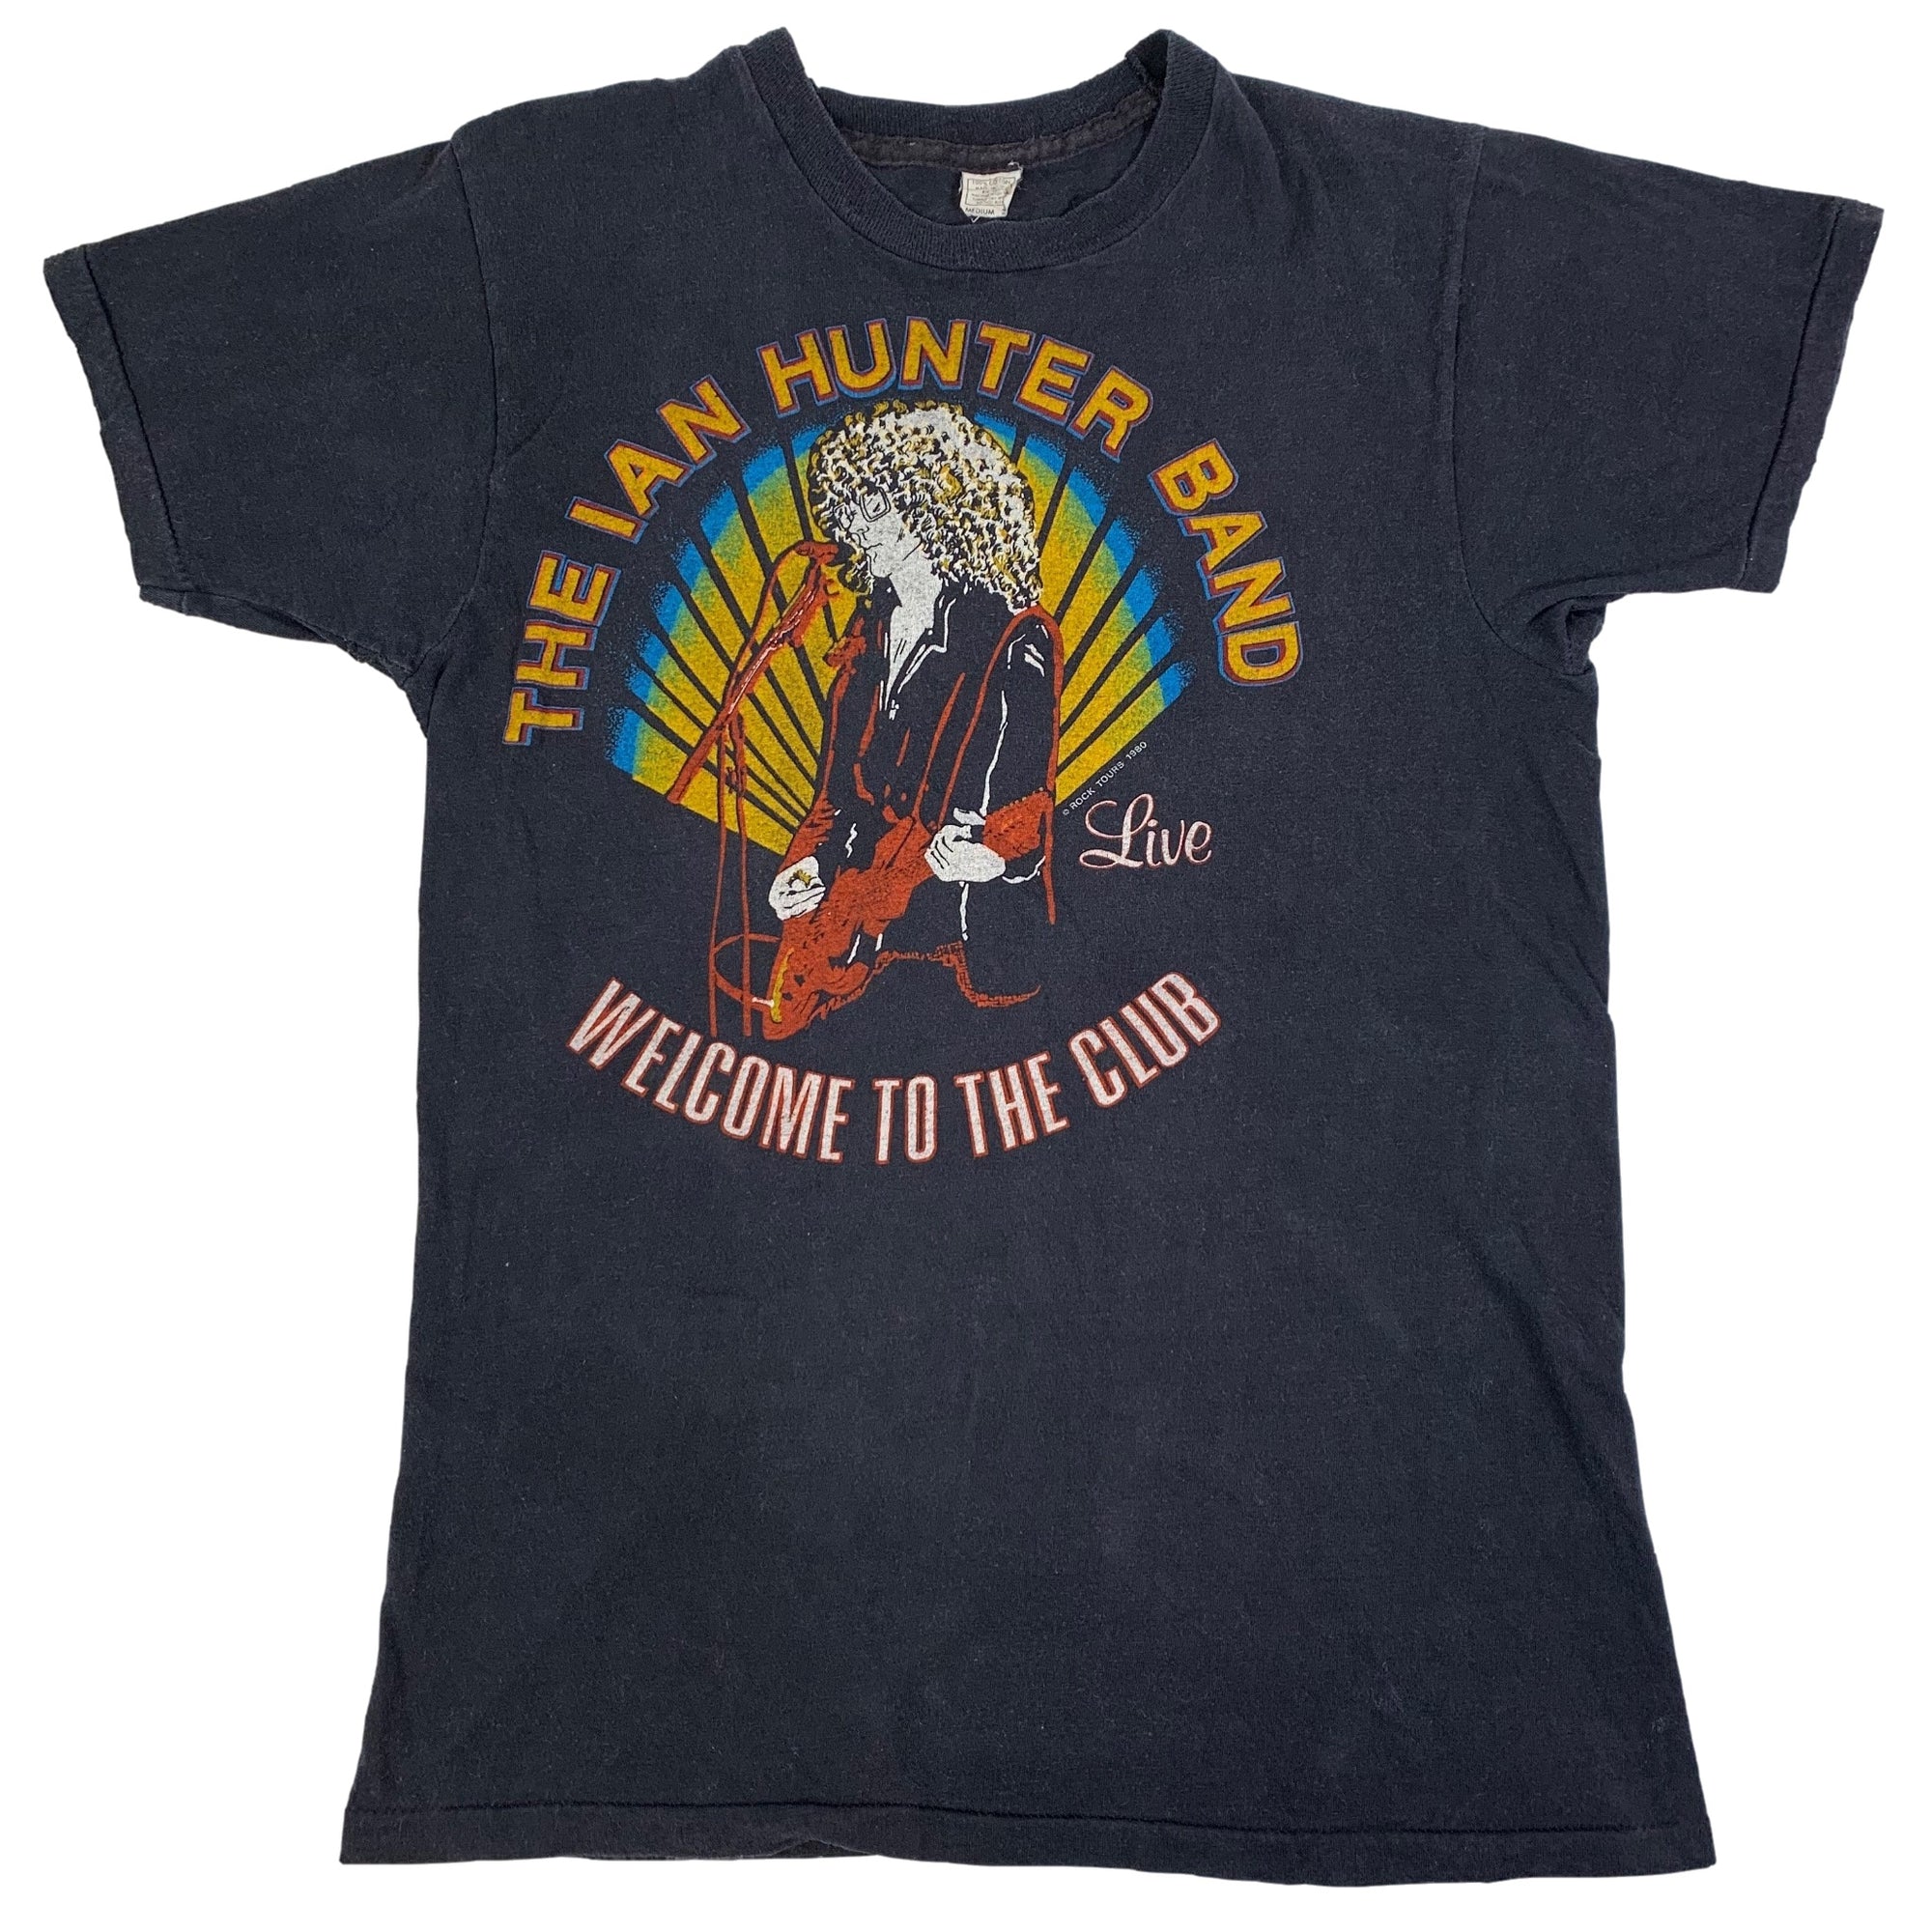 Vintage Ian Hunter & Mick Ronson "Welcome To The Club" T-Shirt - jointcustodydc